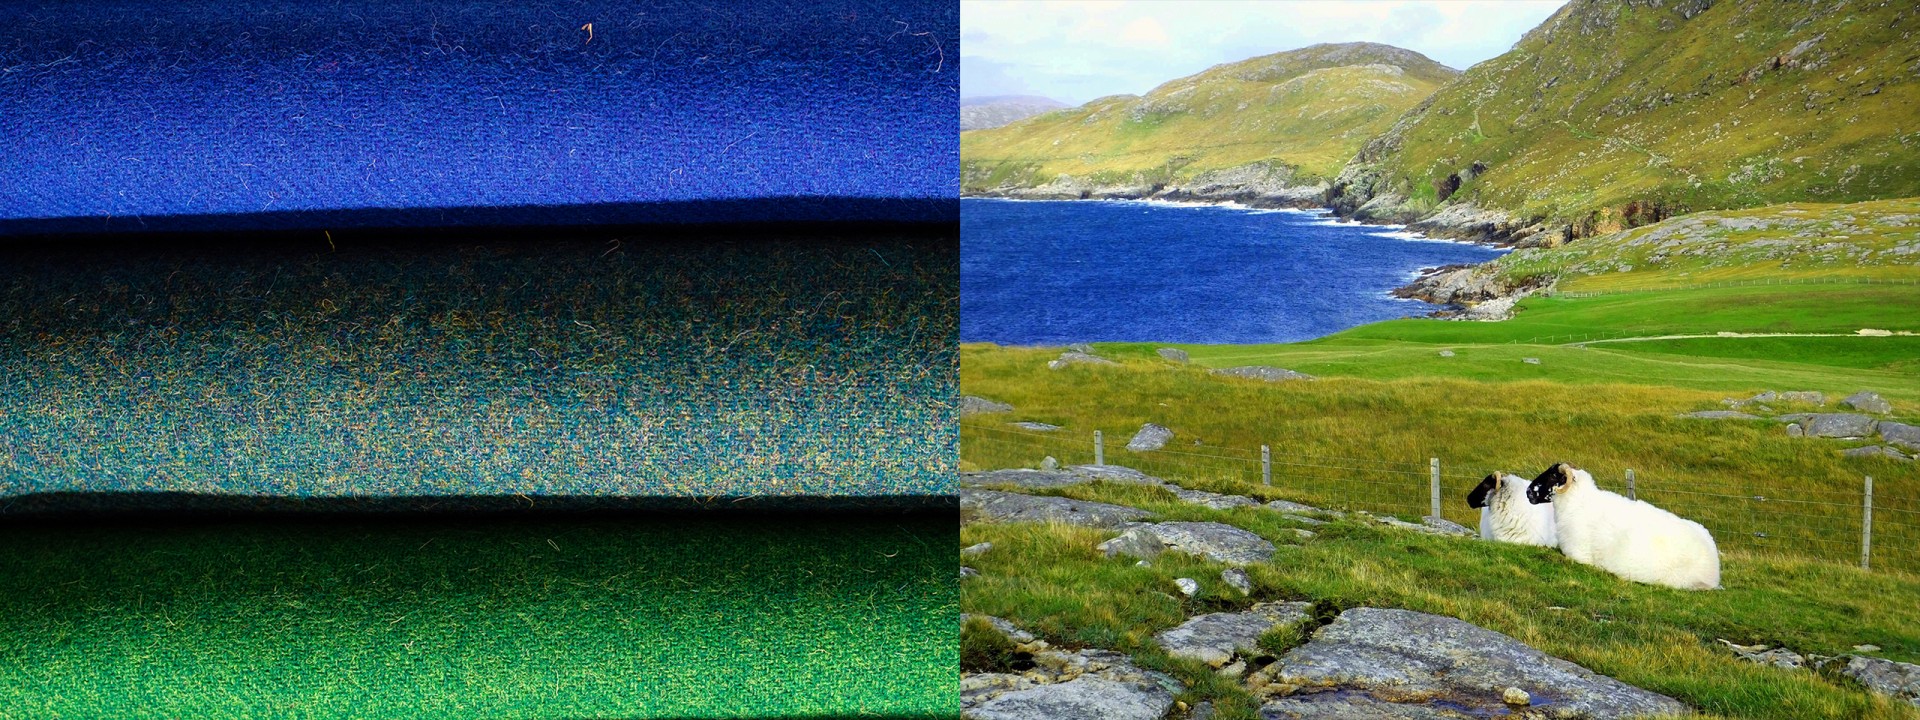 Harris Tweed sheep landscape gazing